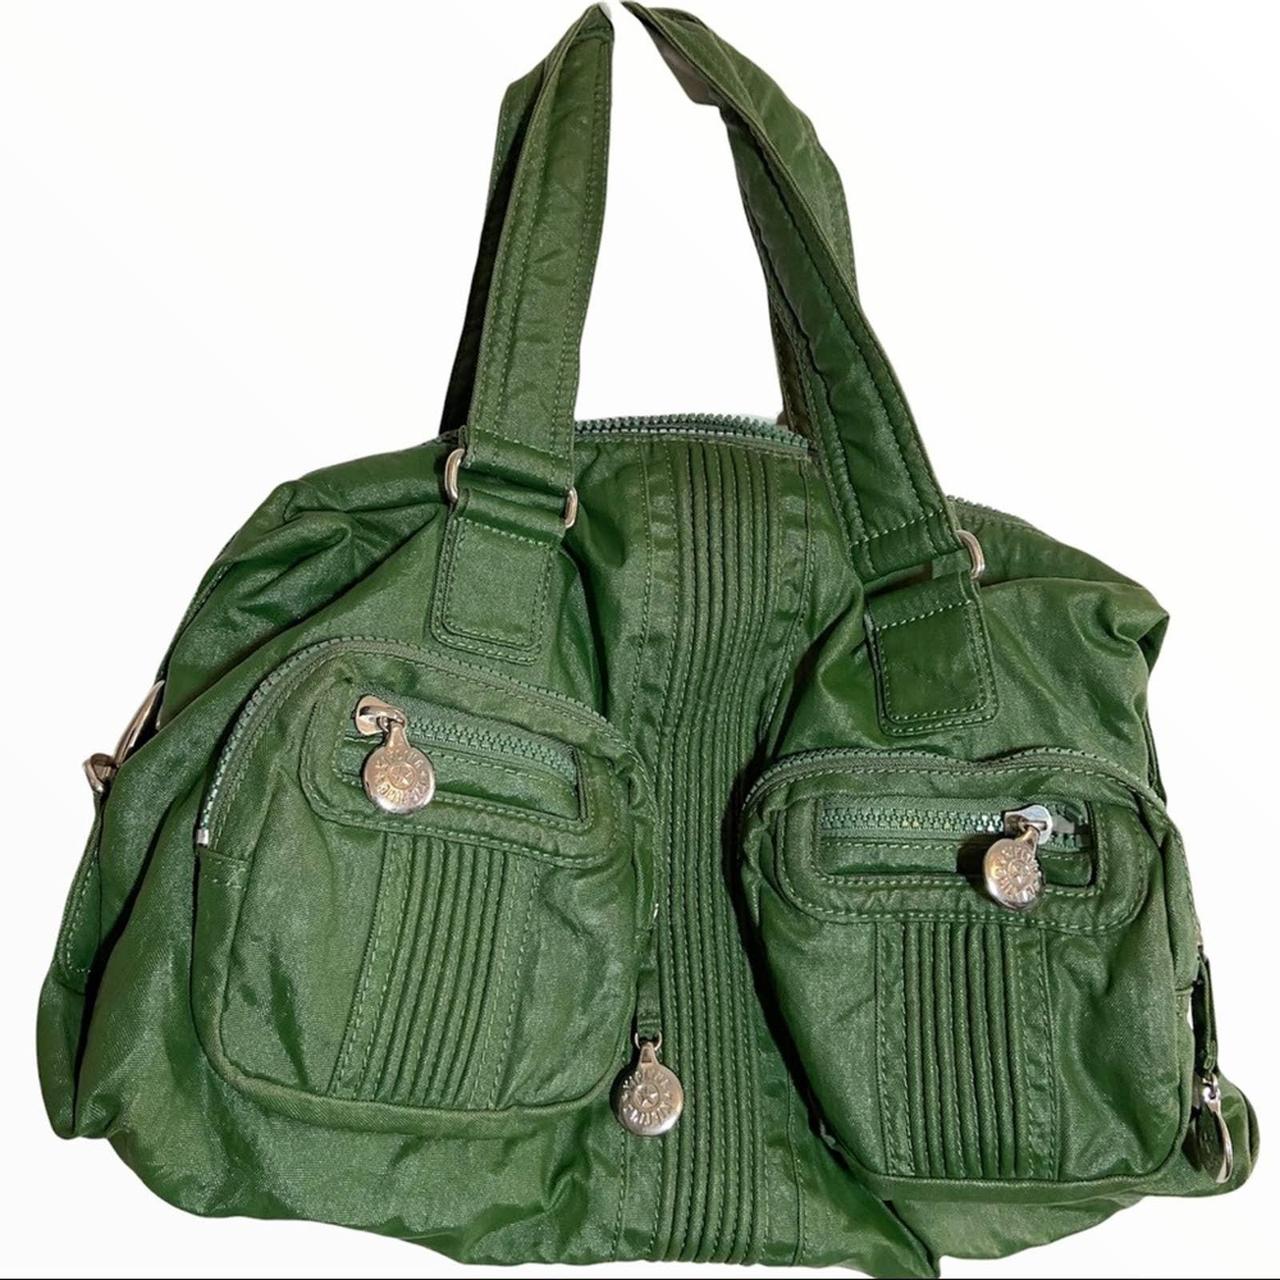 Kipling Women's Green and Silver Bag